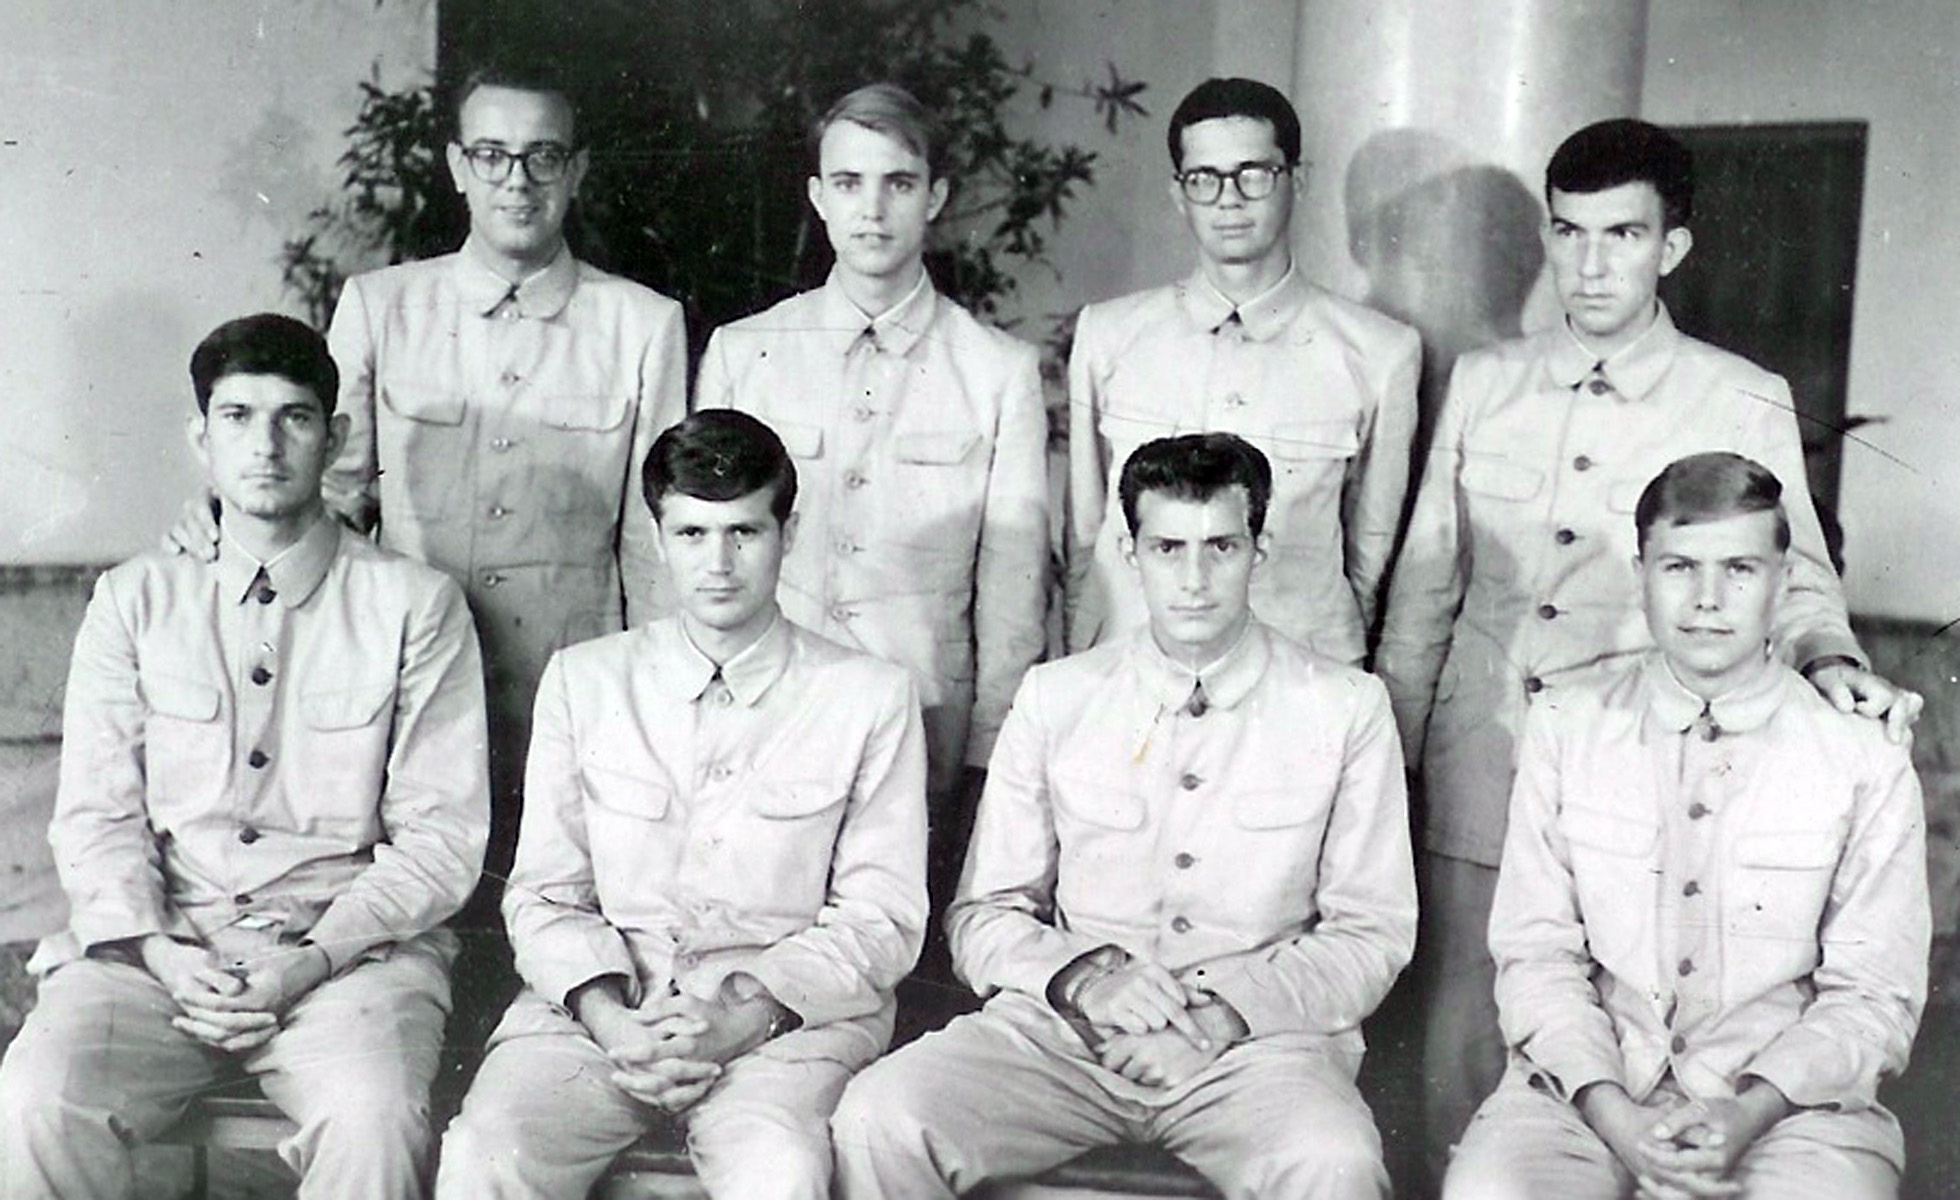 Crew members of USS Pueblo pose while in captivity in North Korea in 1968.